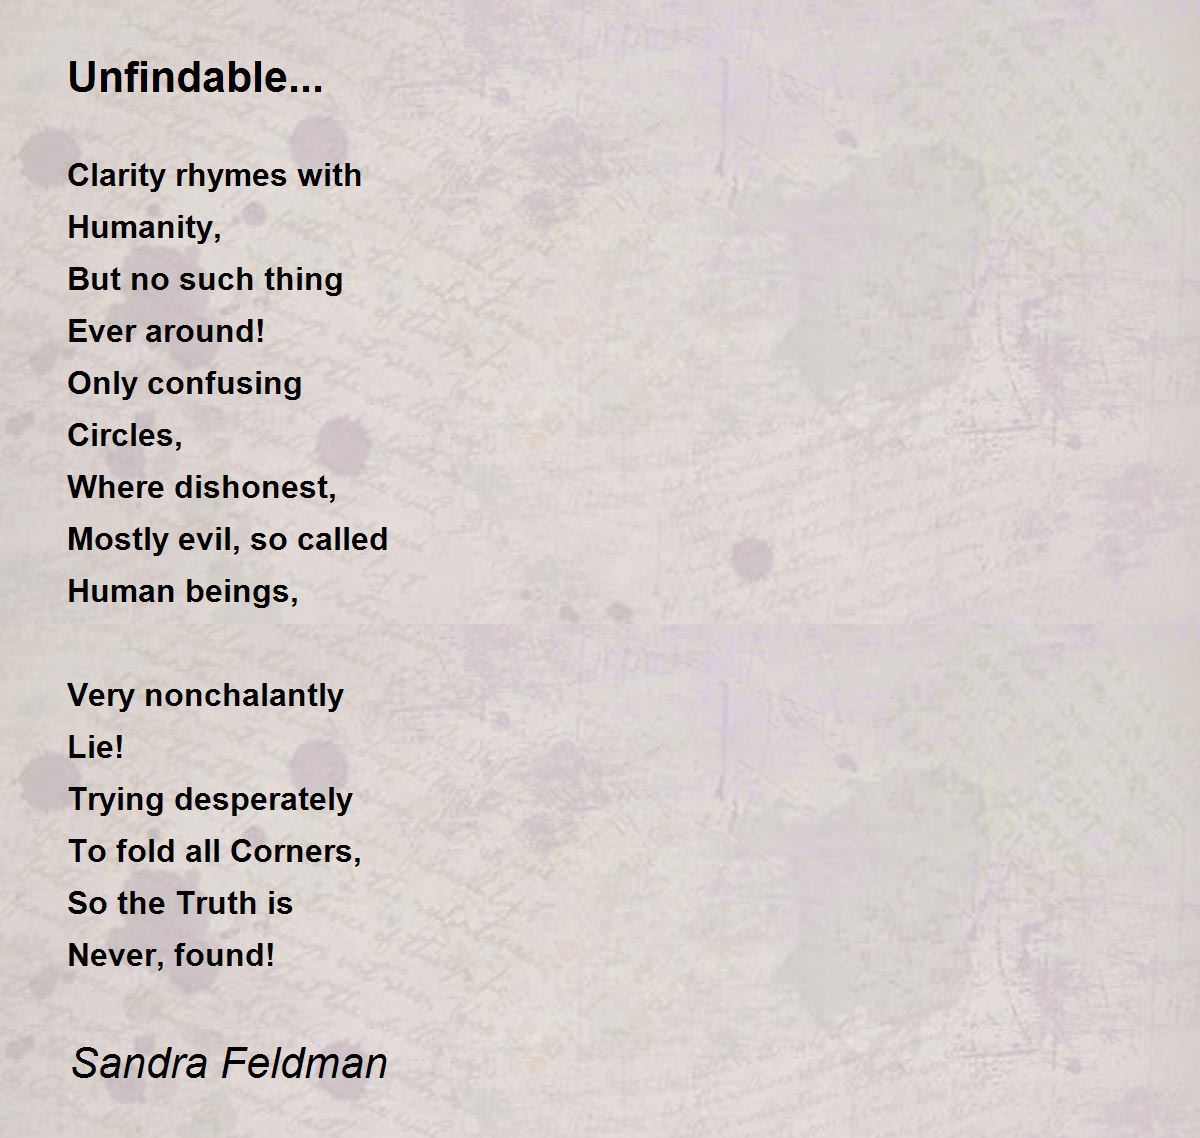 Unfindable - Unfindable Poem by Sandra Feldman